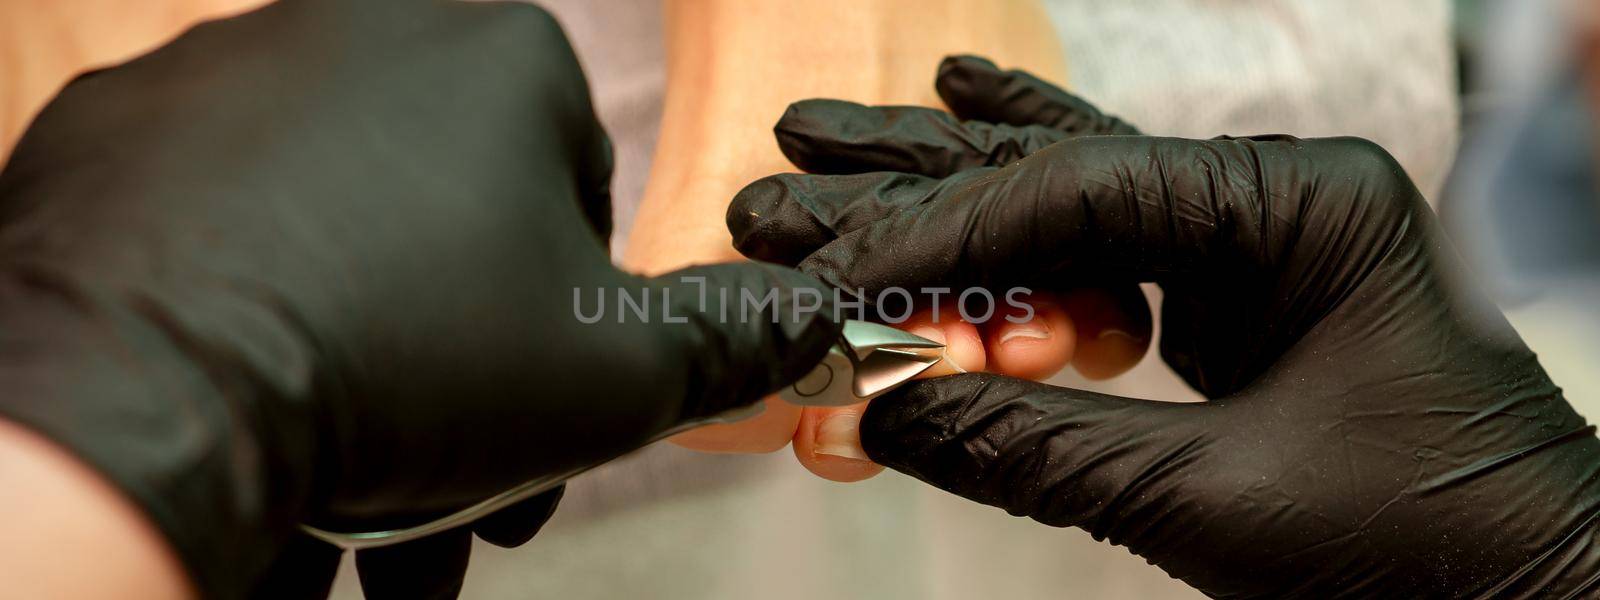 Professional pedicure. Pedicure master wearing latex gloves cuts female toenails in the beauty salon, closeup. by okskukuruza